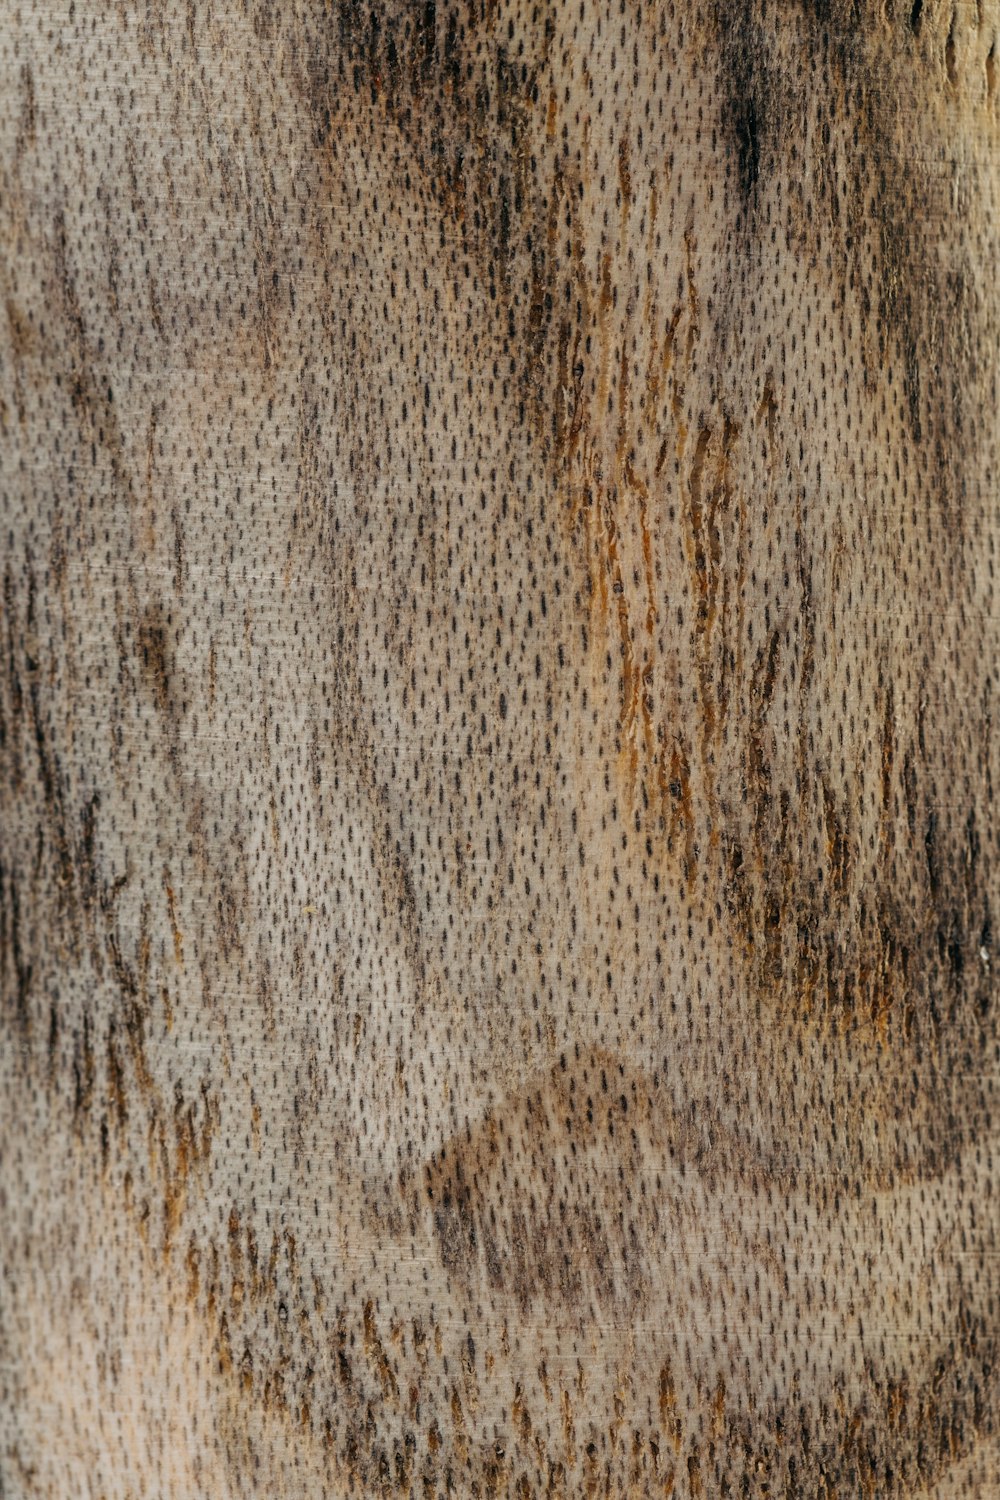 Premium Vector  Seamless wood plank texture background